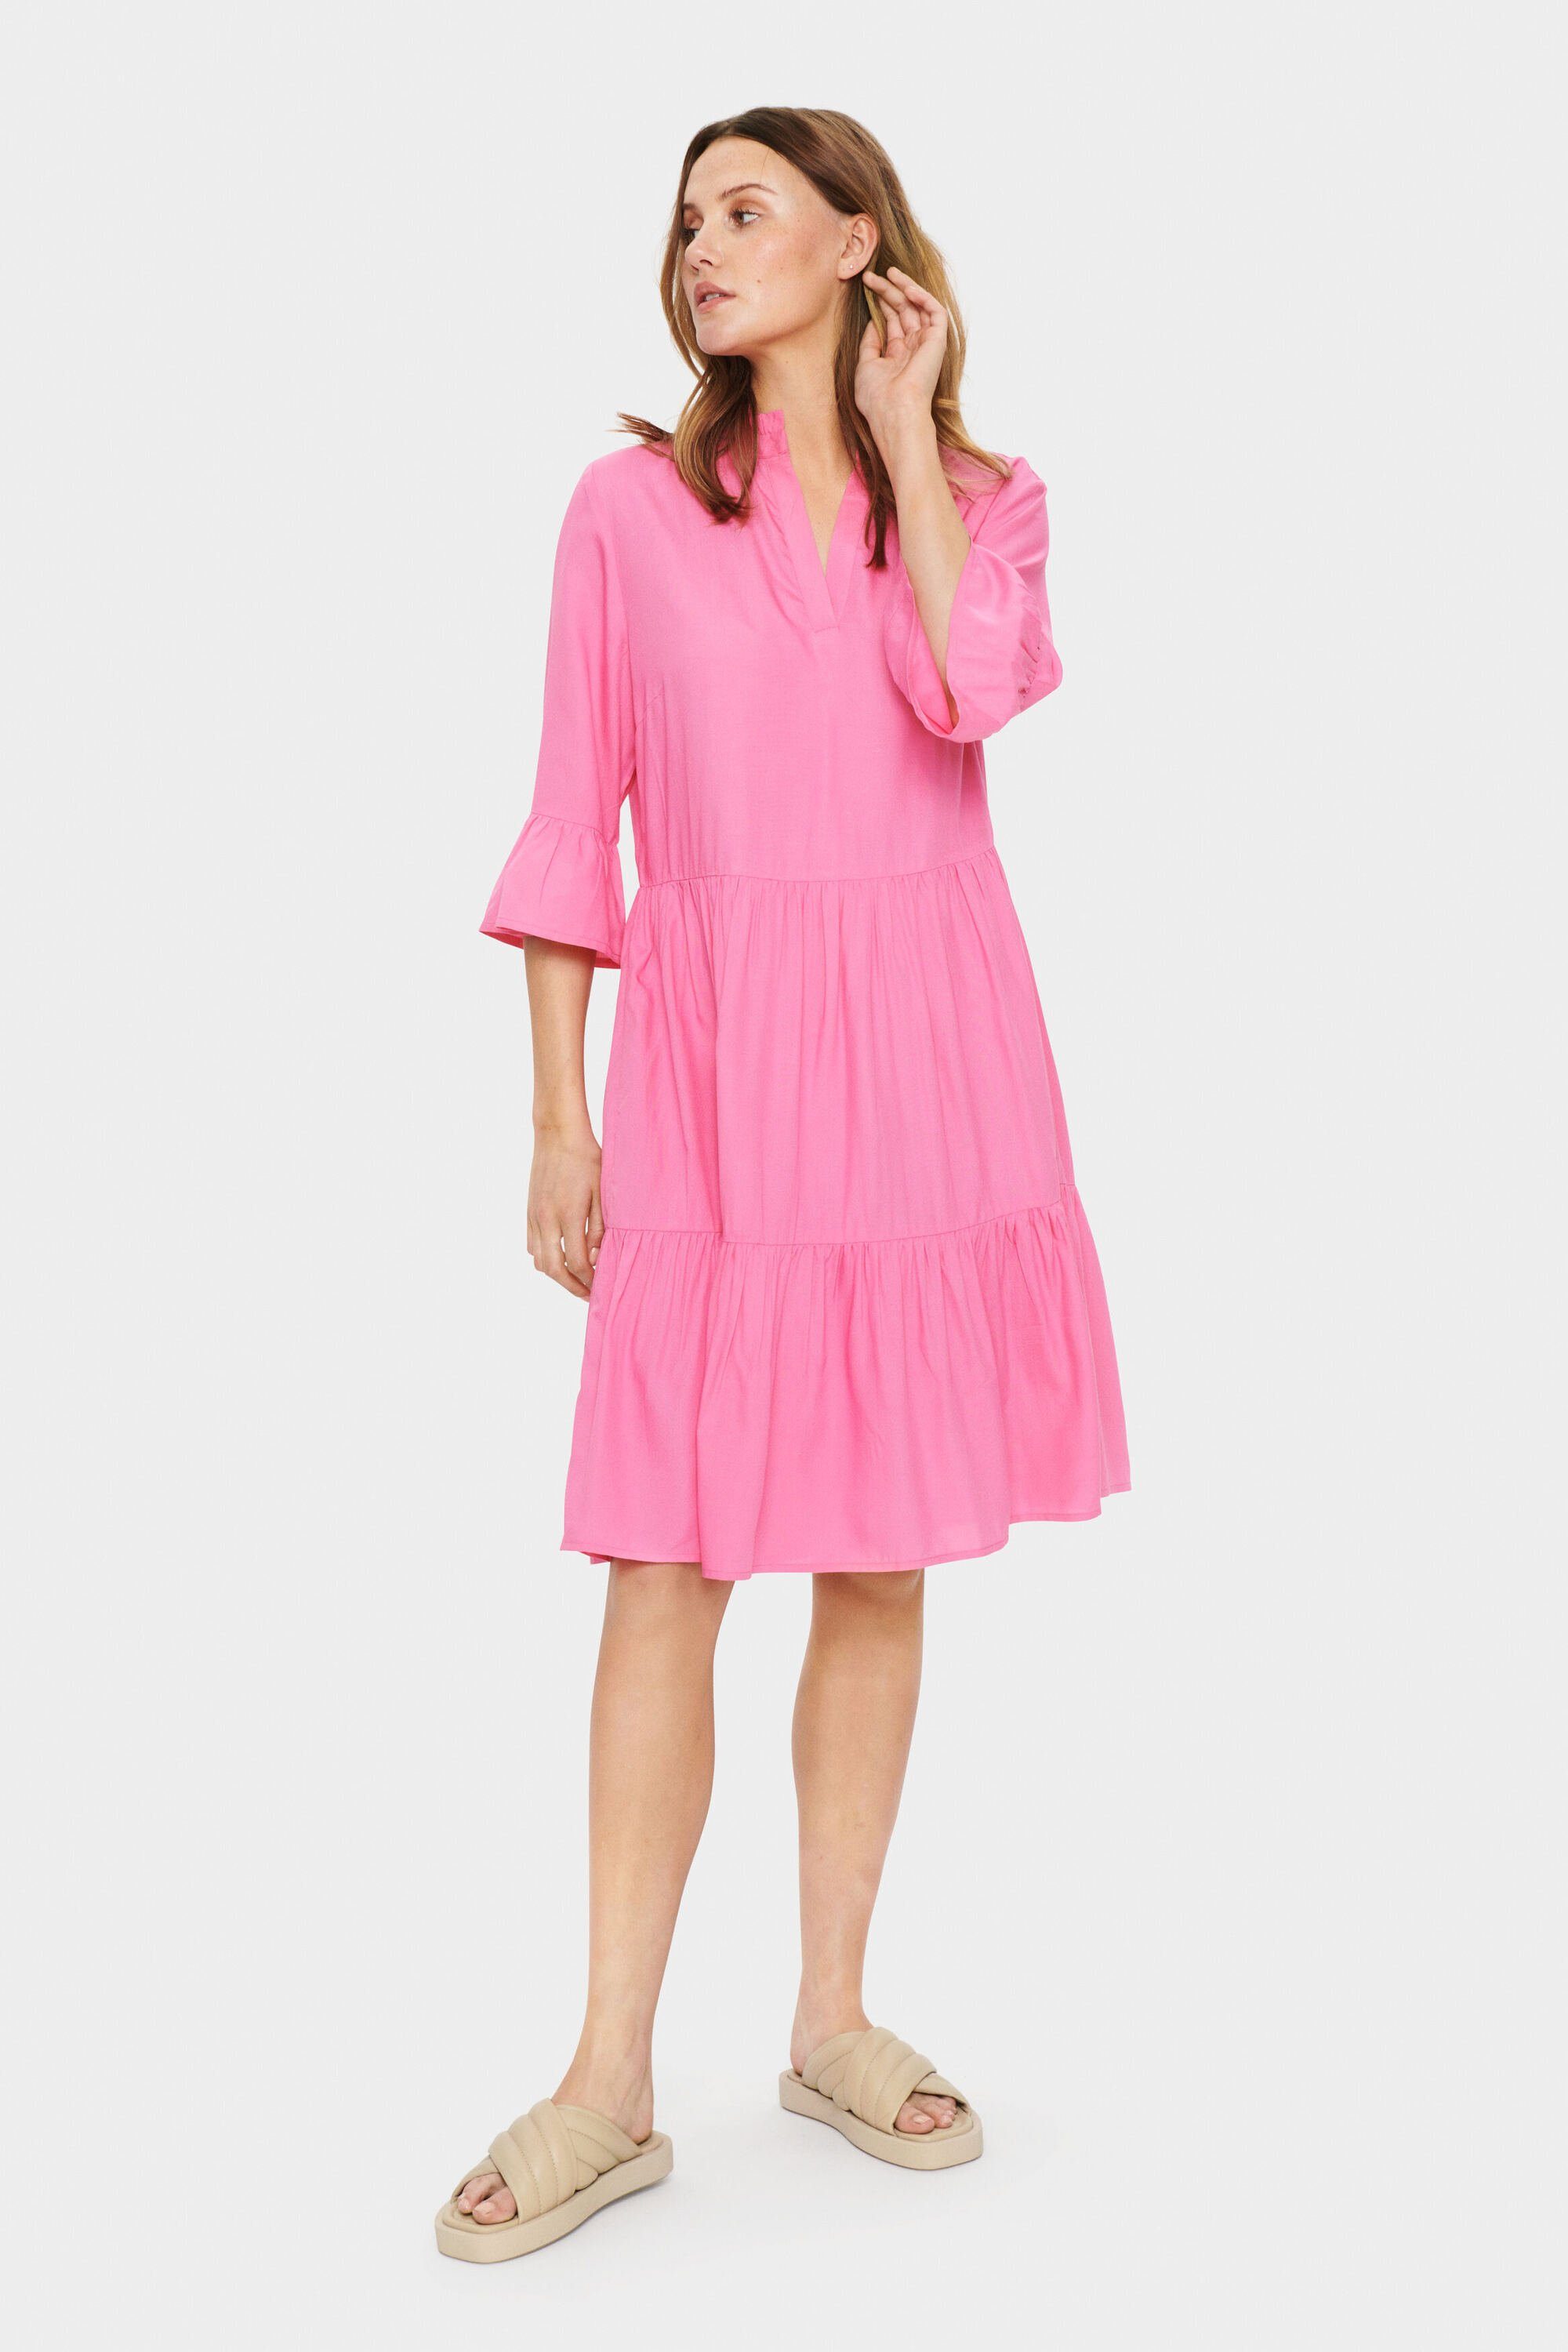 Azalea Pink Jerseykleid Kleid Saint EdaSZ Tropez